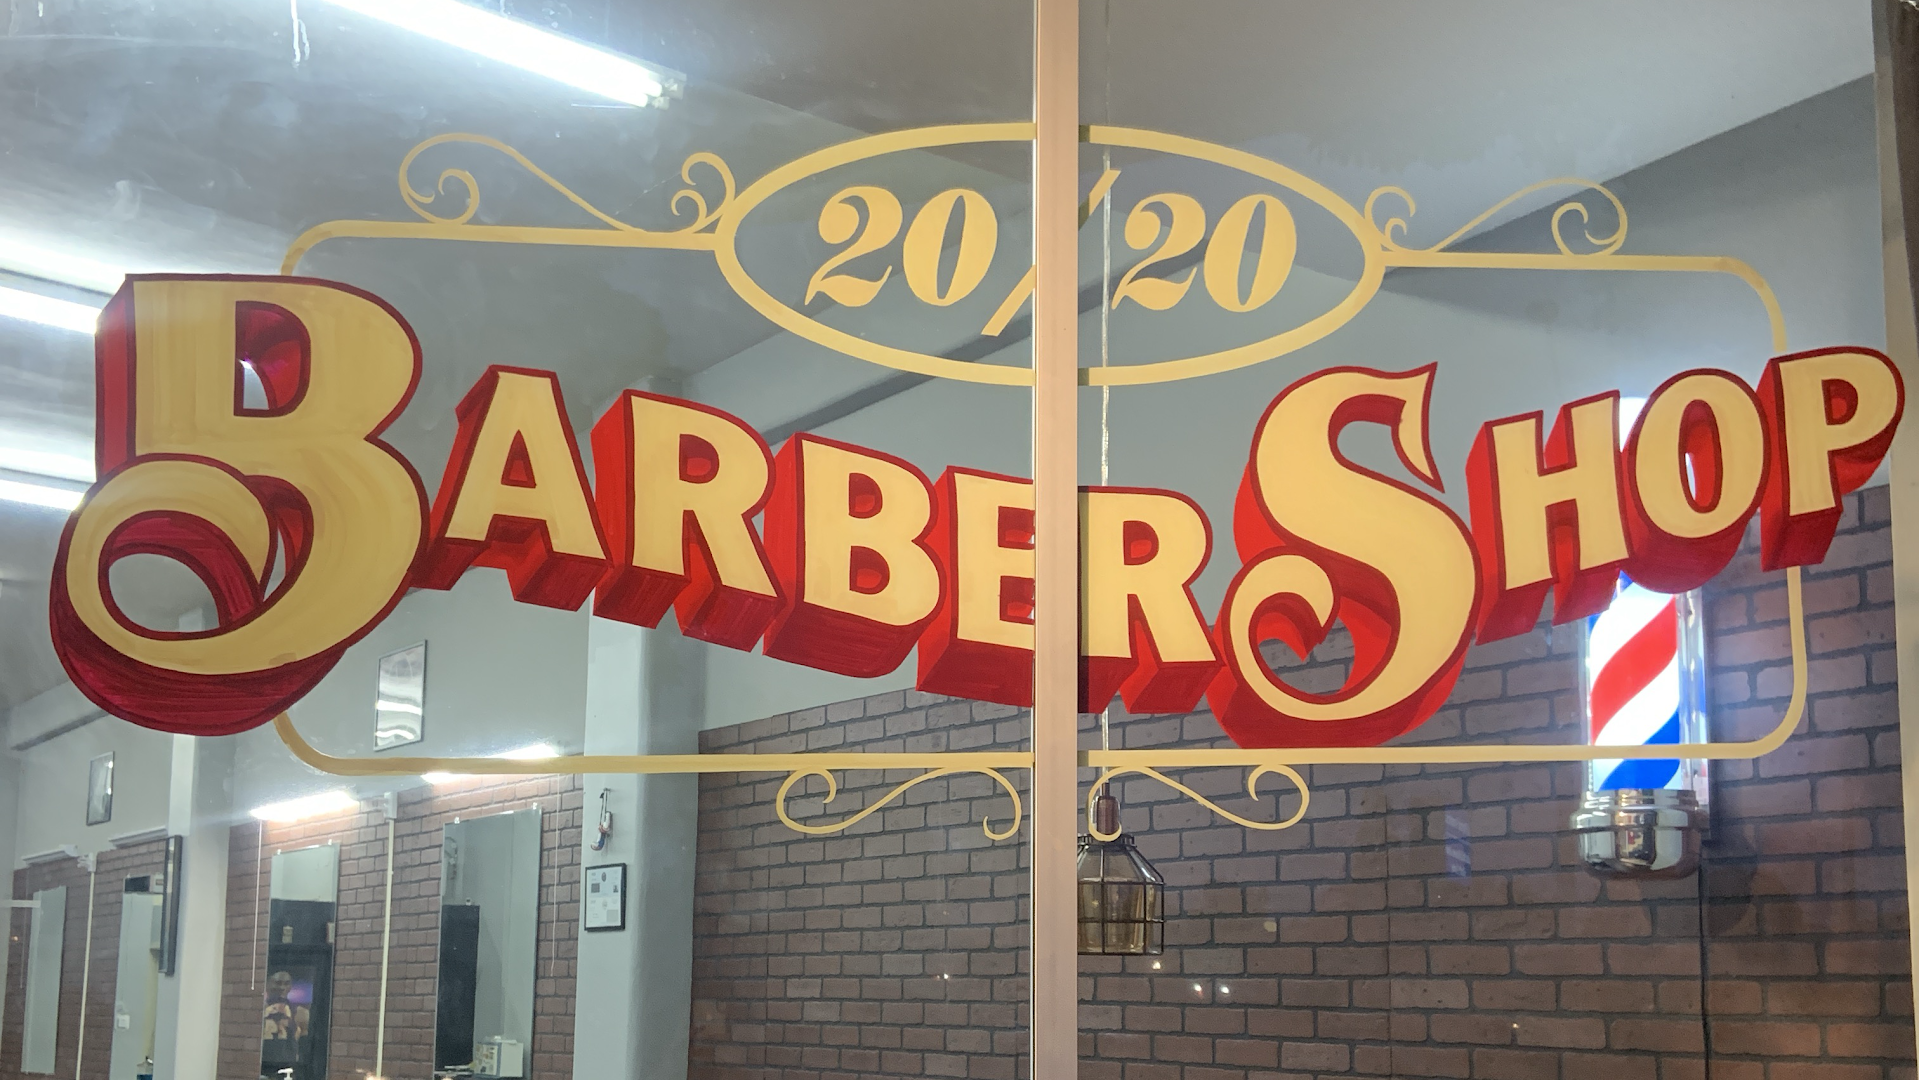 20/20 BarberShop